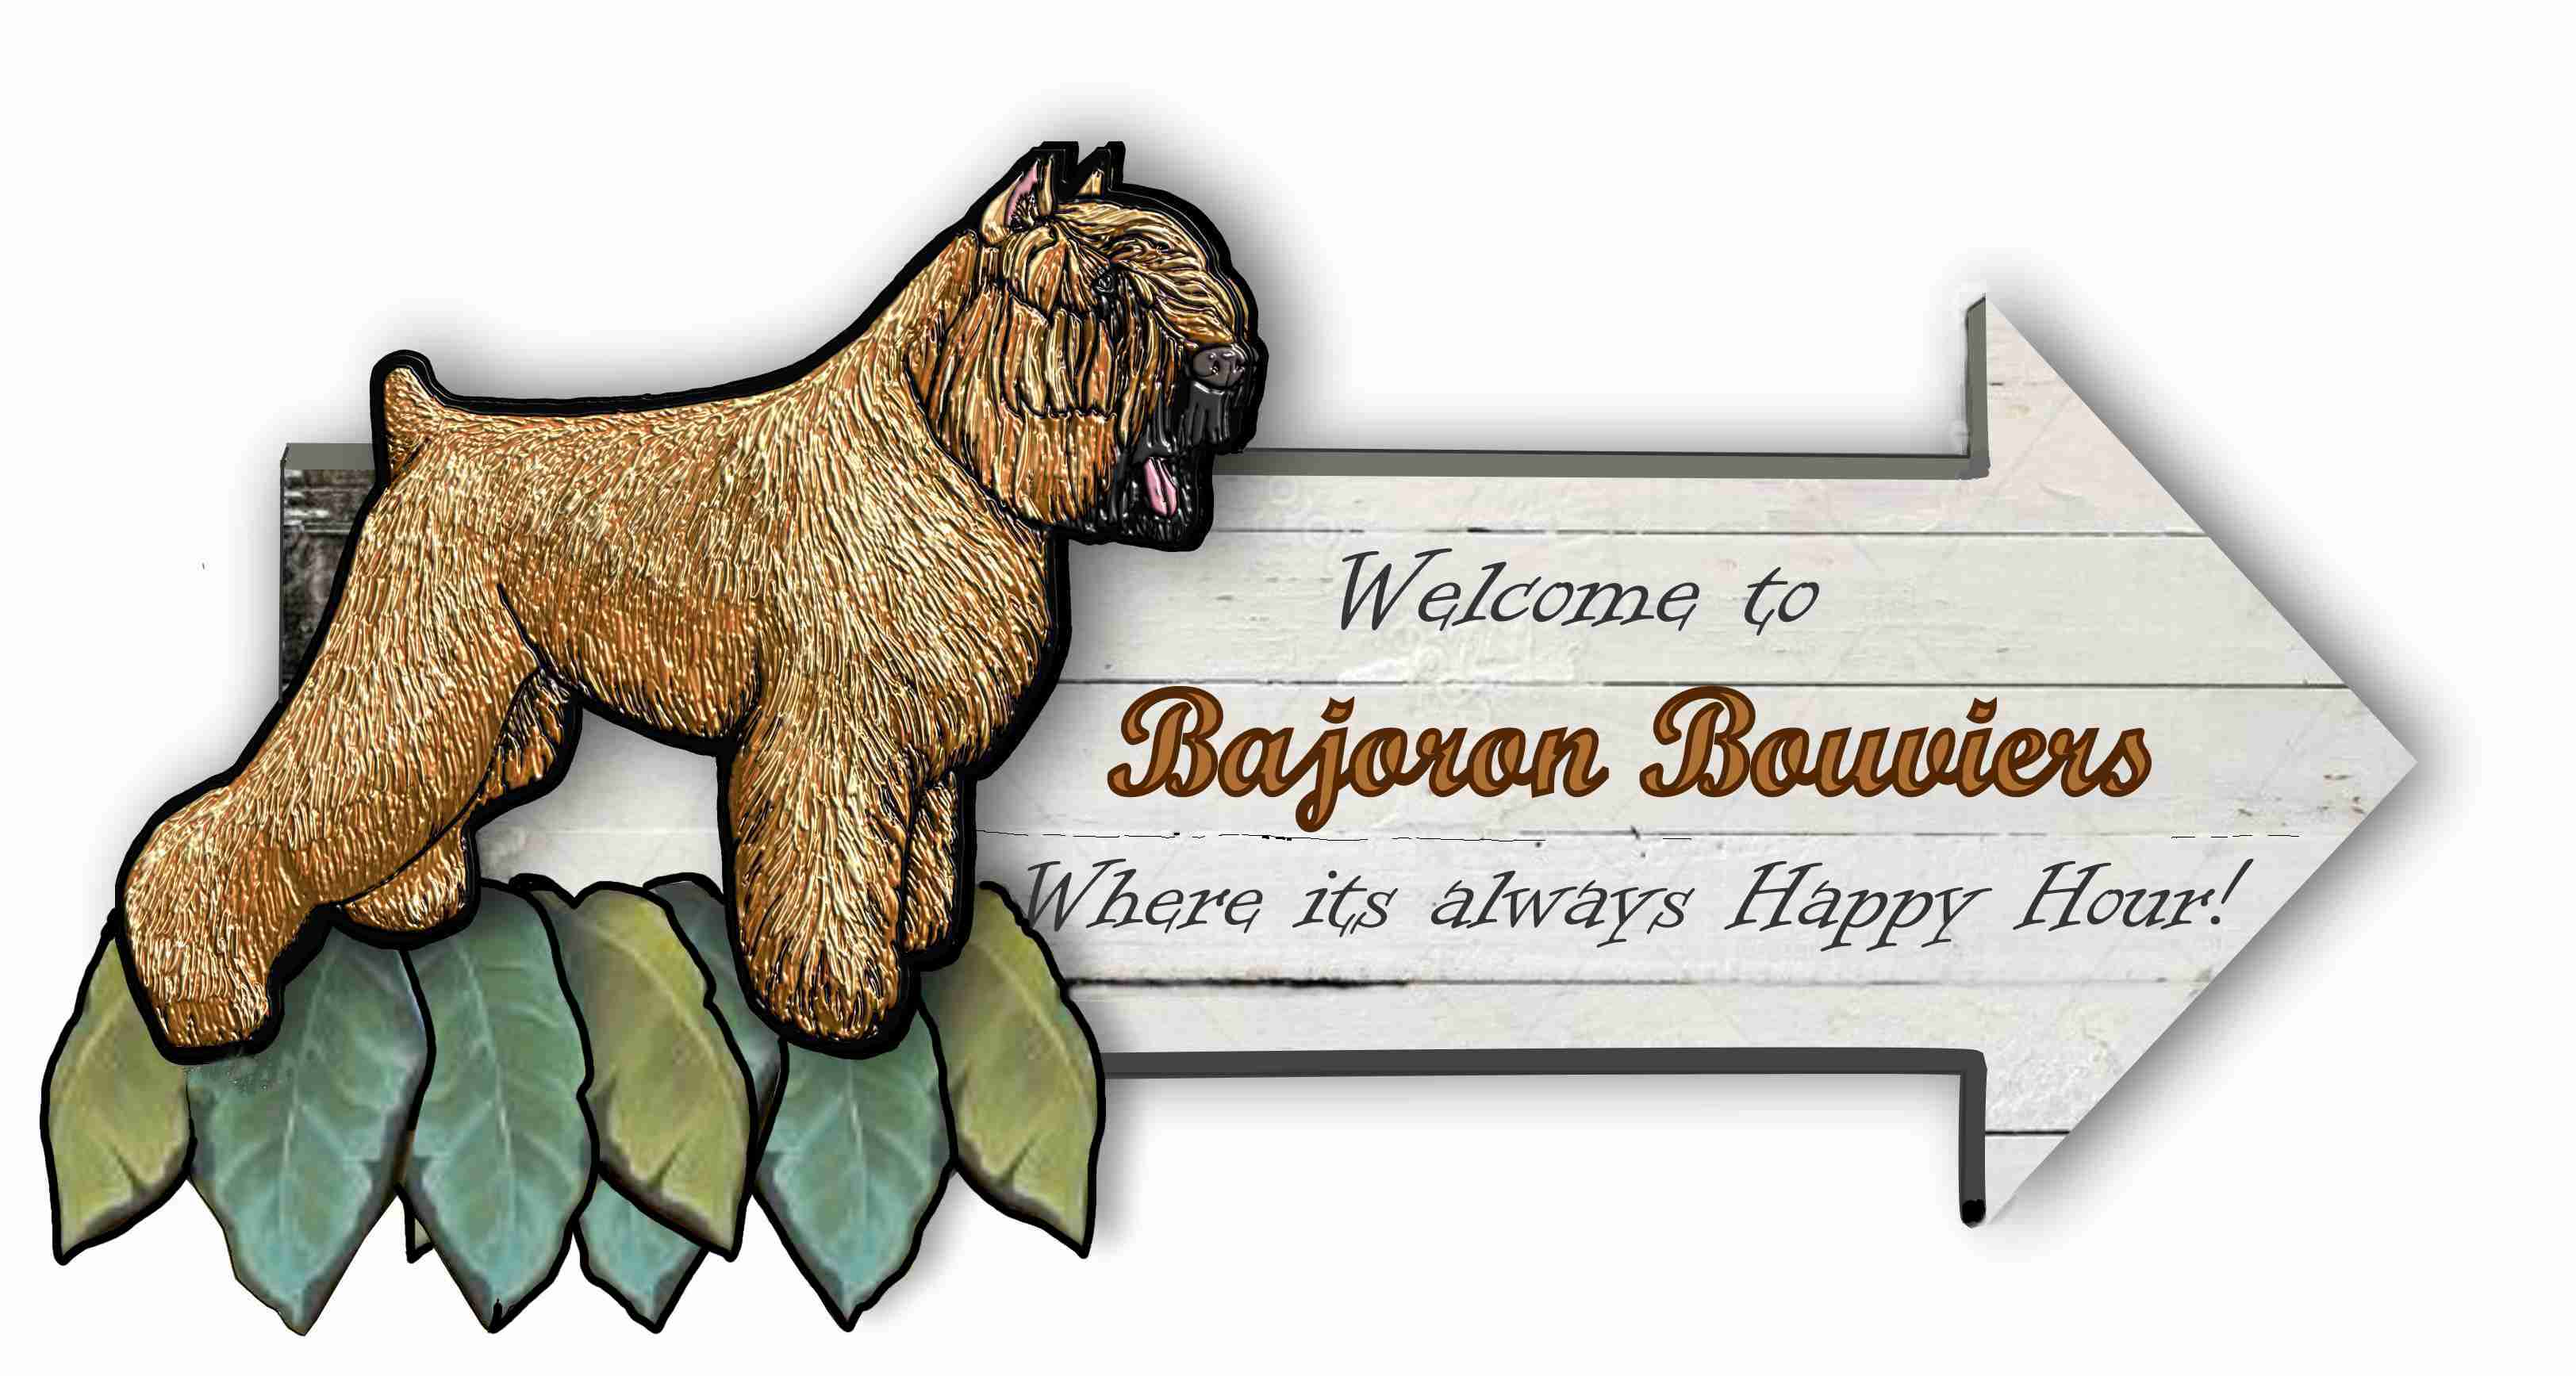 At Bajoron Bouviers its always Happy Hour!